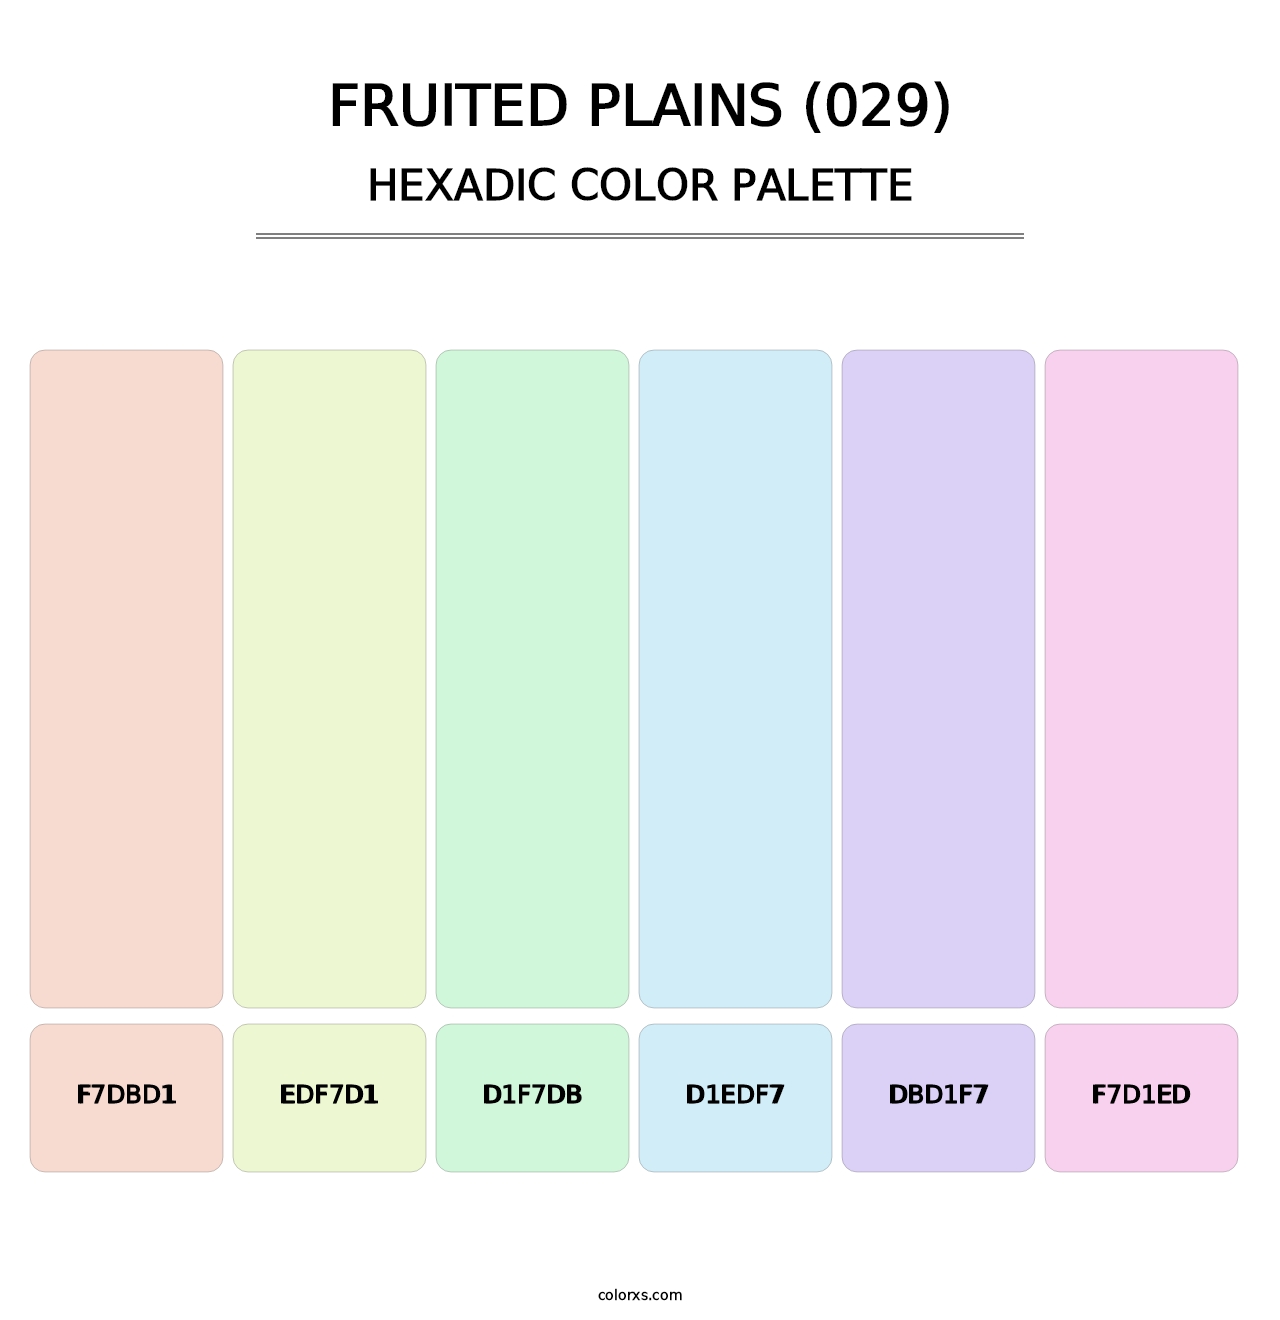 Fruited Plains (029) - Hexadic Color Palette